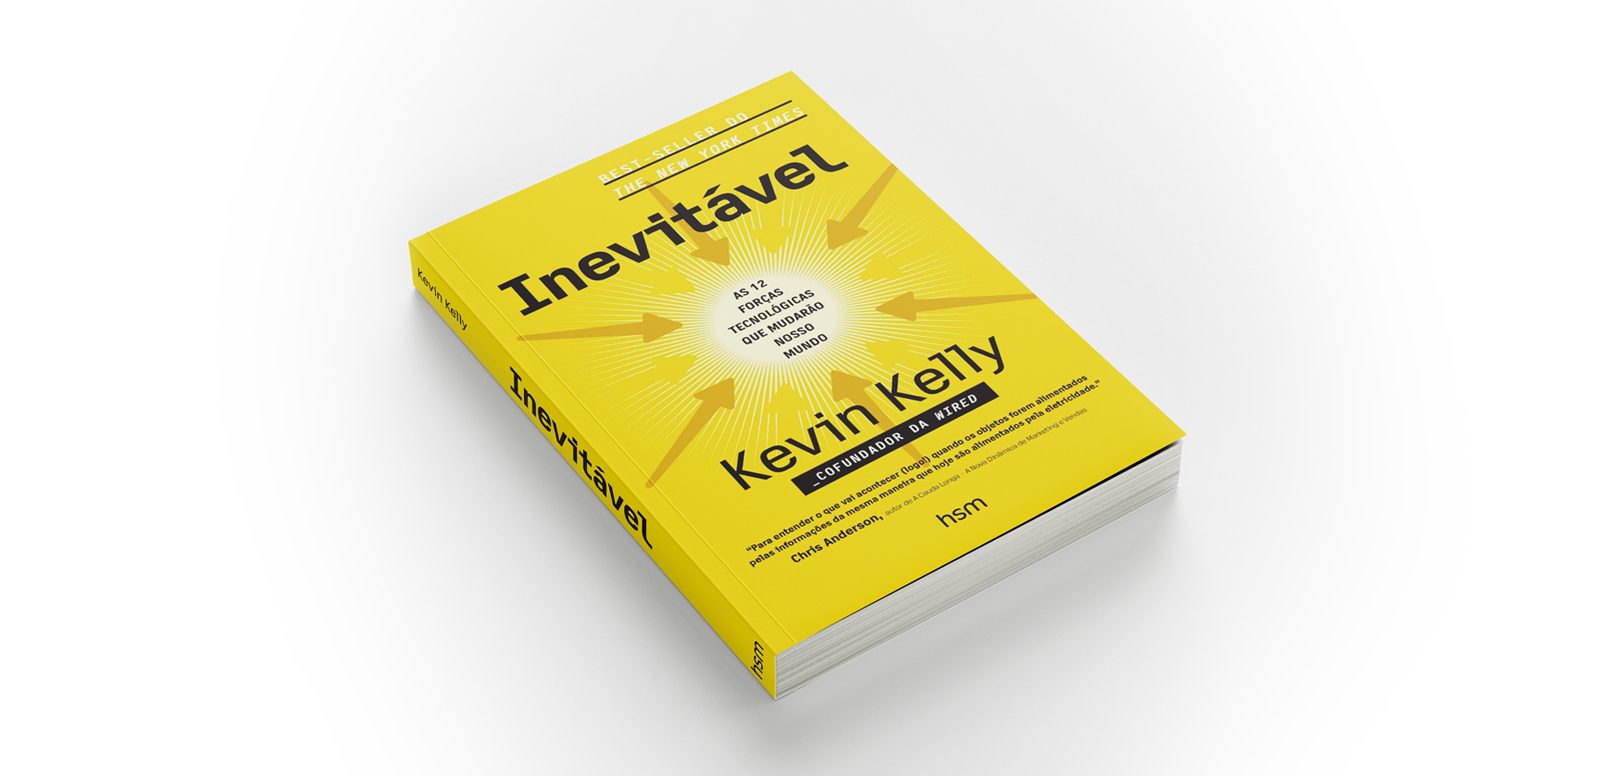 Inevitável - Kevin Kelly - Experience Club